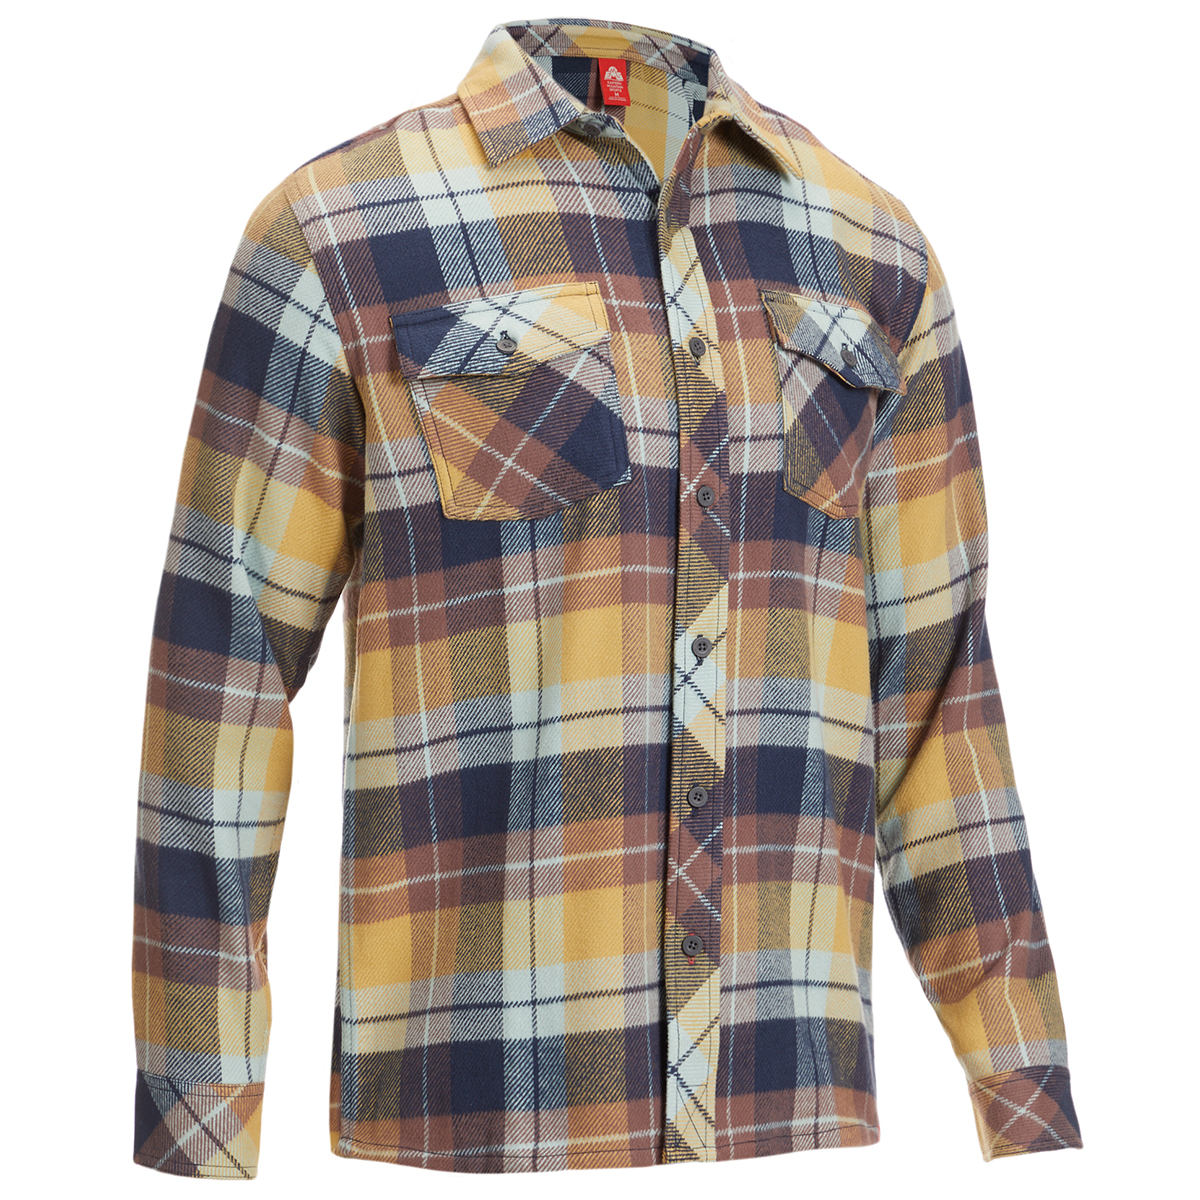 Ems Men's Cabin Flannel Long-Sleeve Shirt